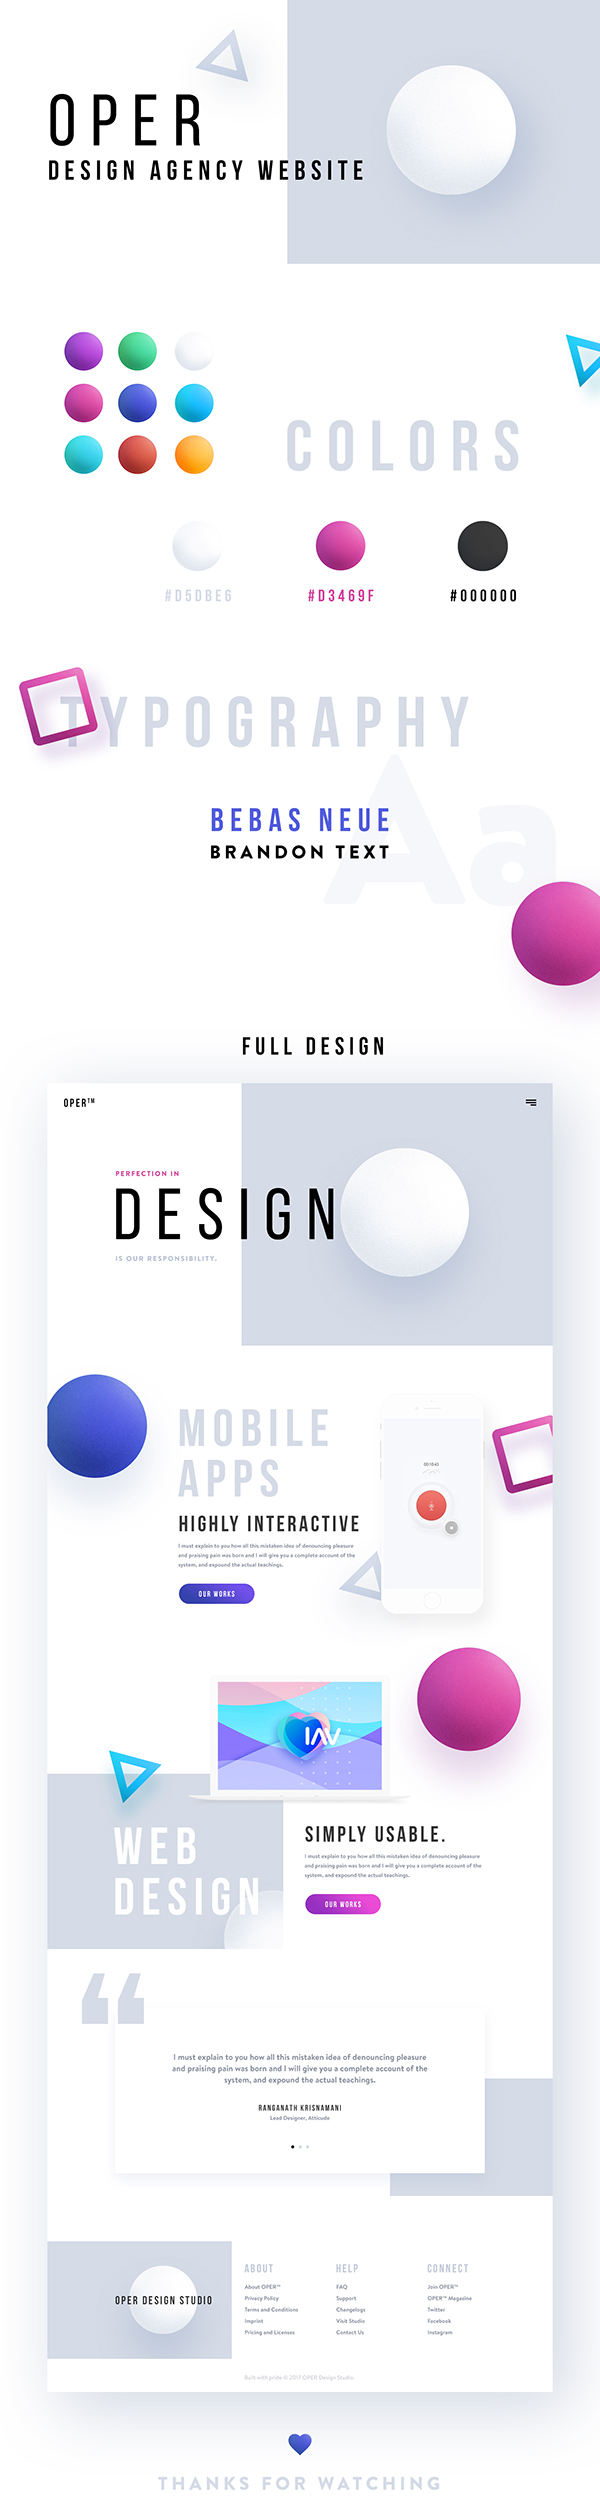 OPER - Design Agency Website